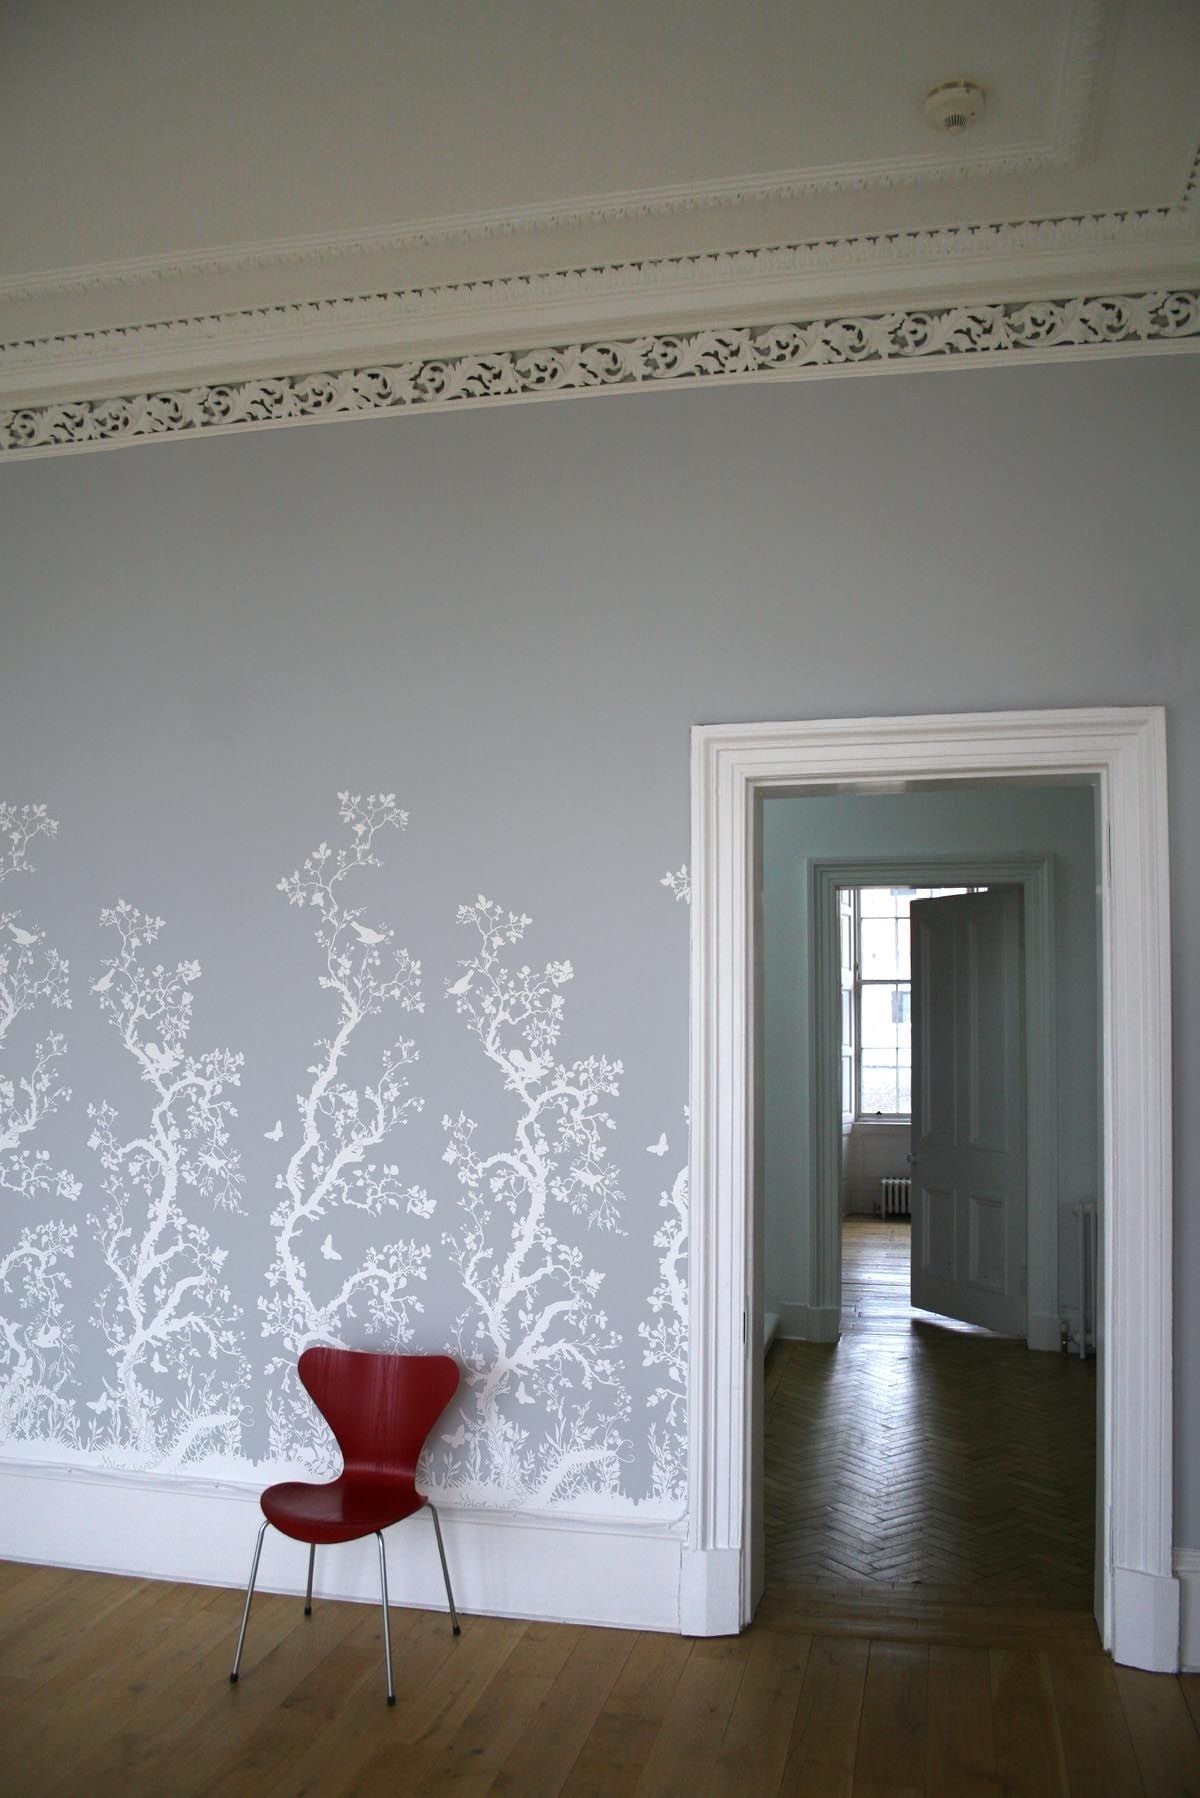 birdbranch hand printed wallpaper panel by timorous beasties wallpaper on adorn.house